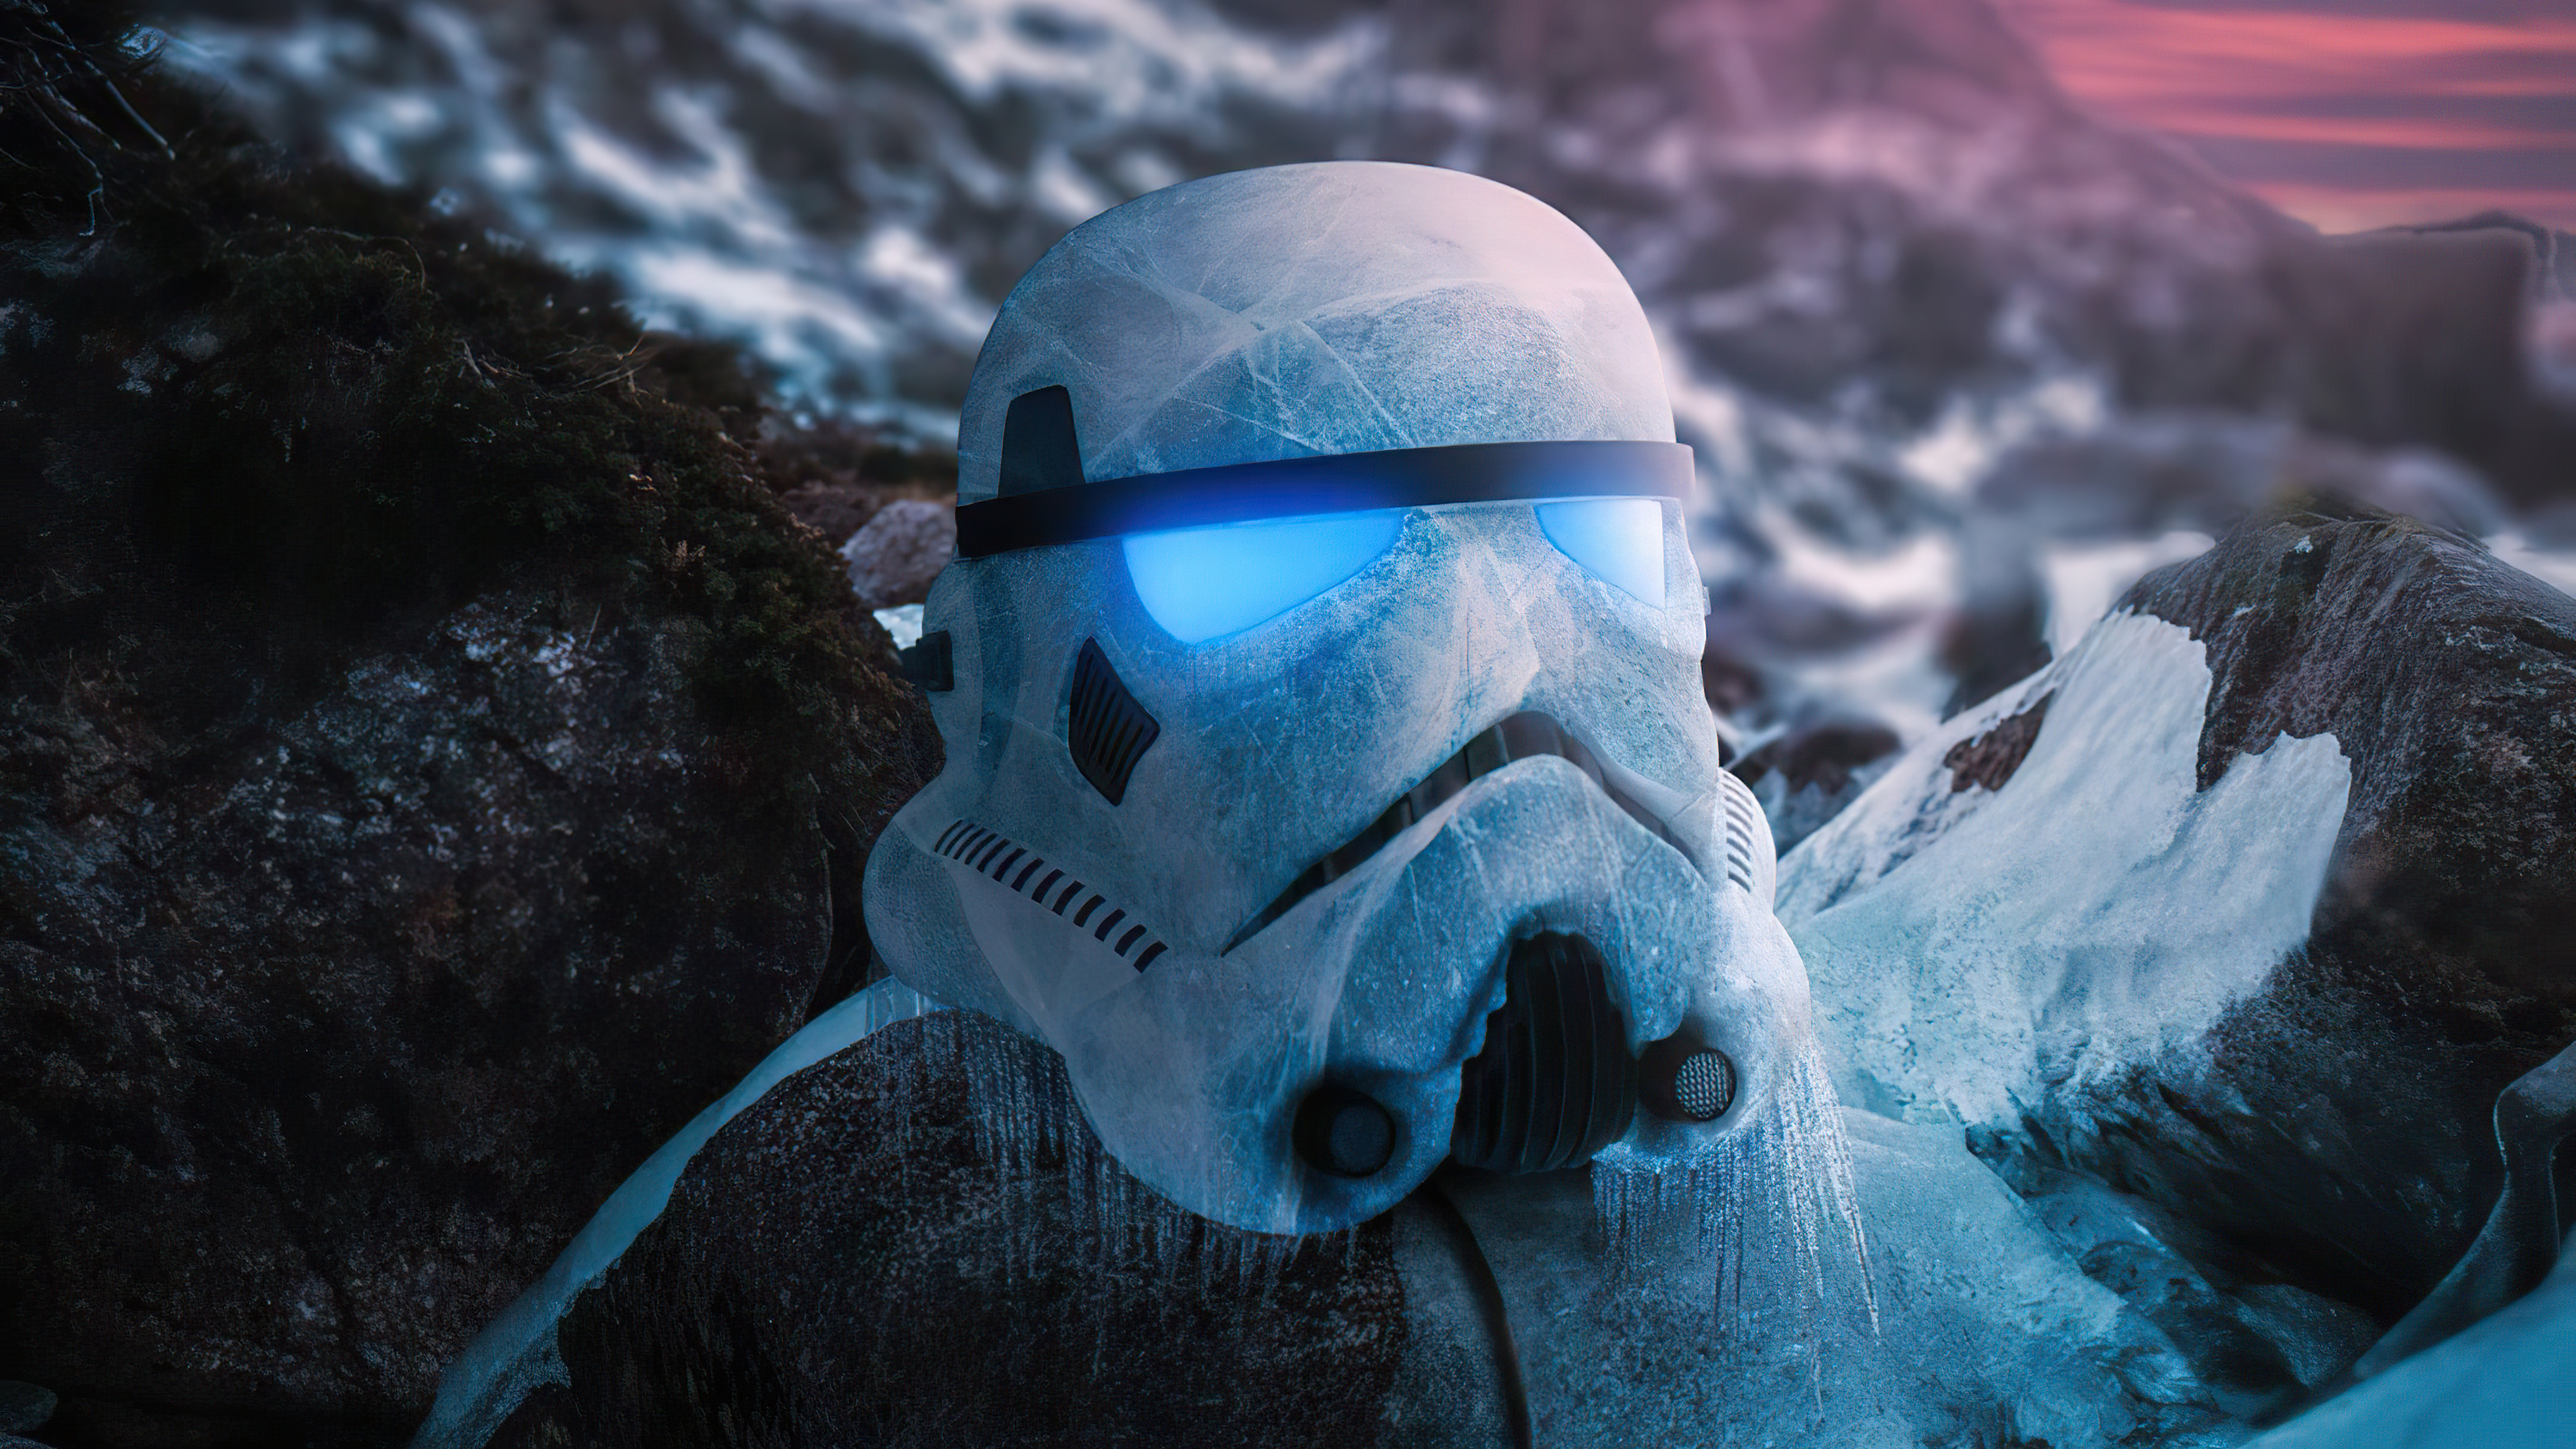 Stormtrooper 4k Ultra HD Wallpaper Background Image